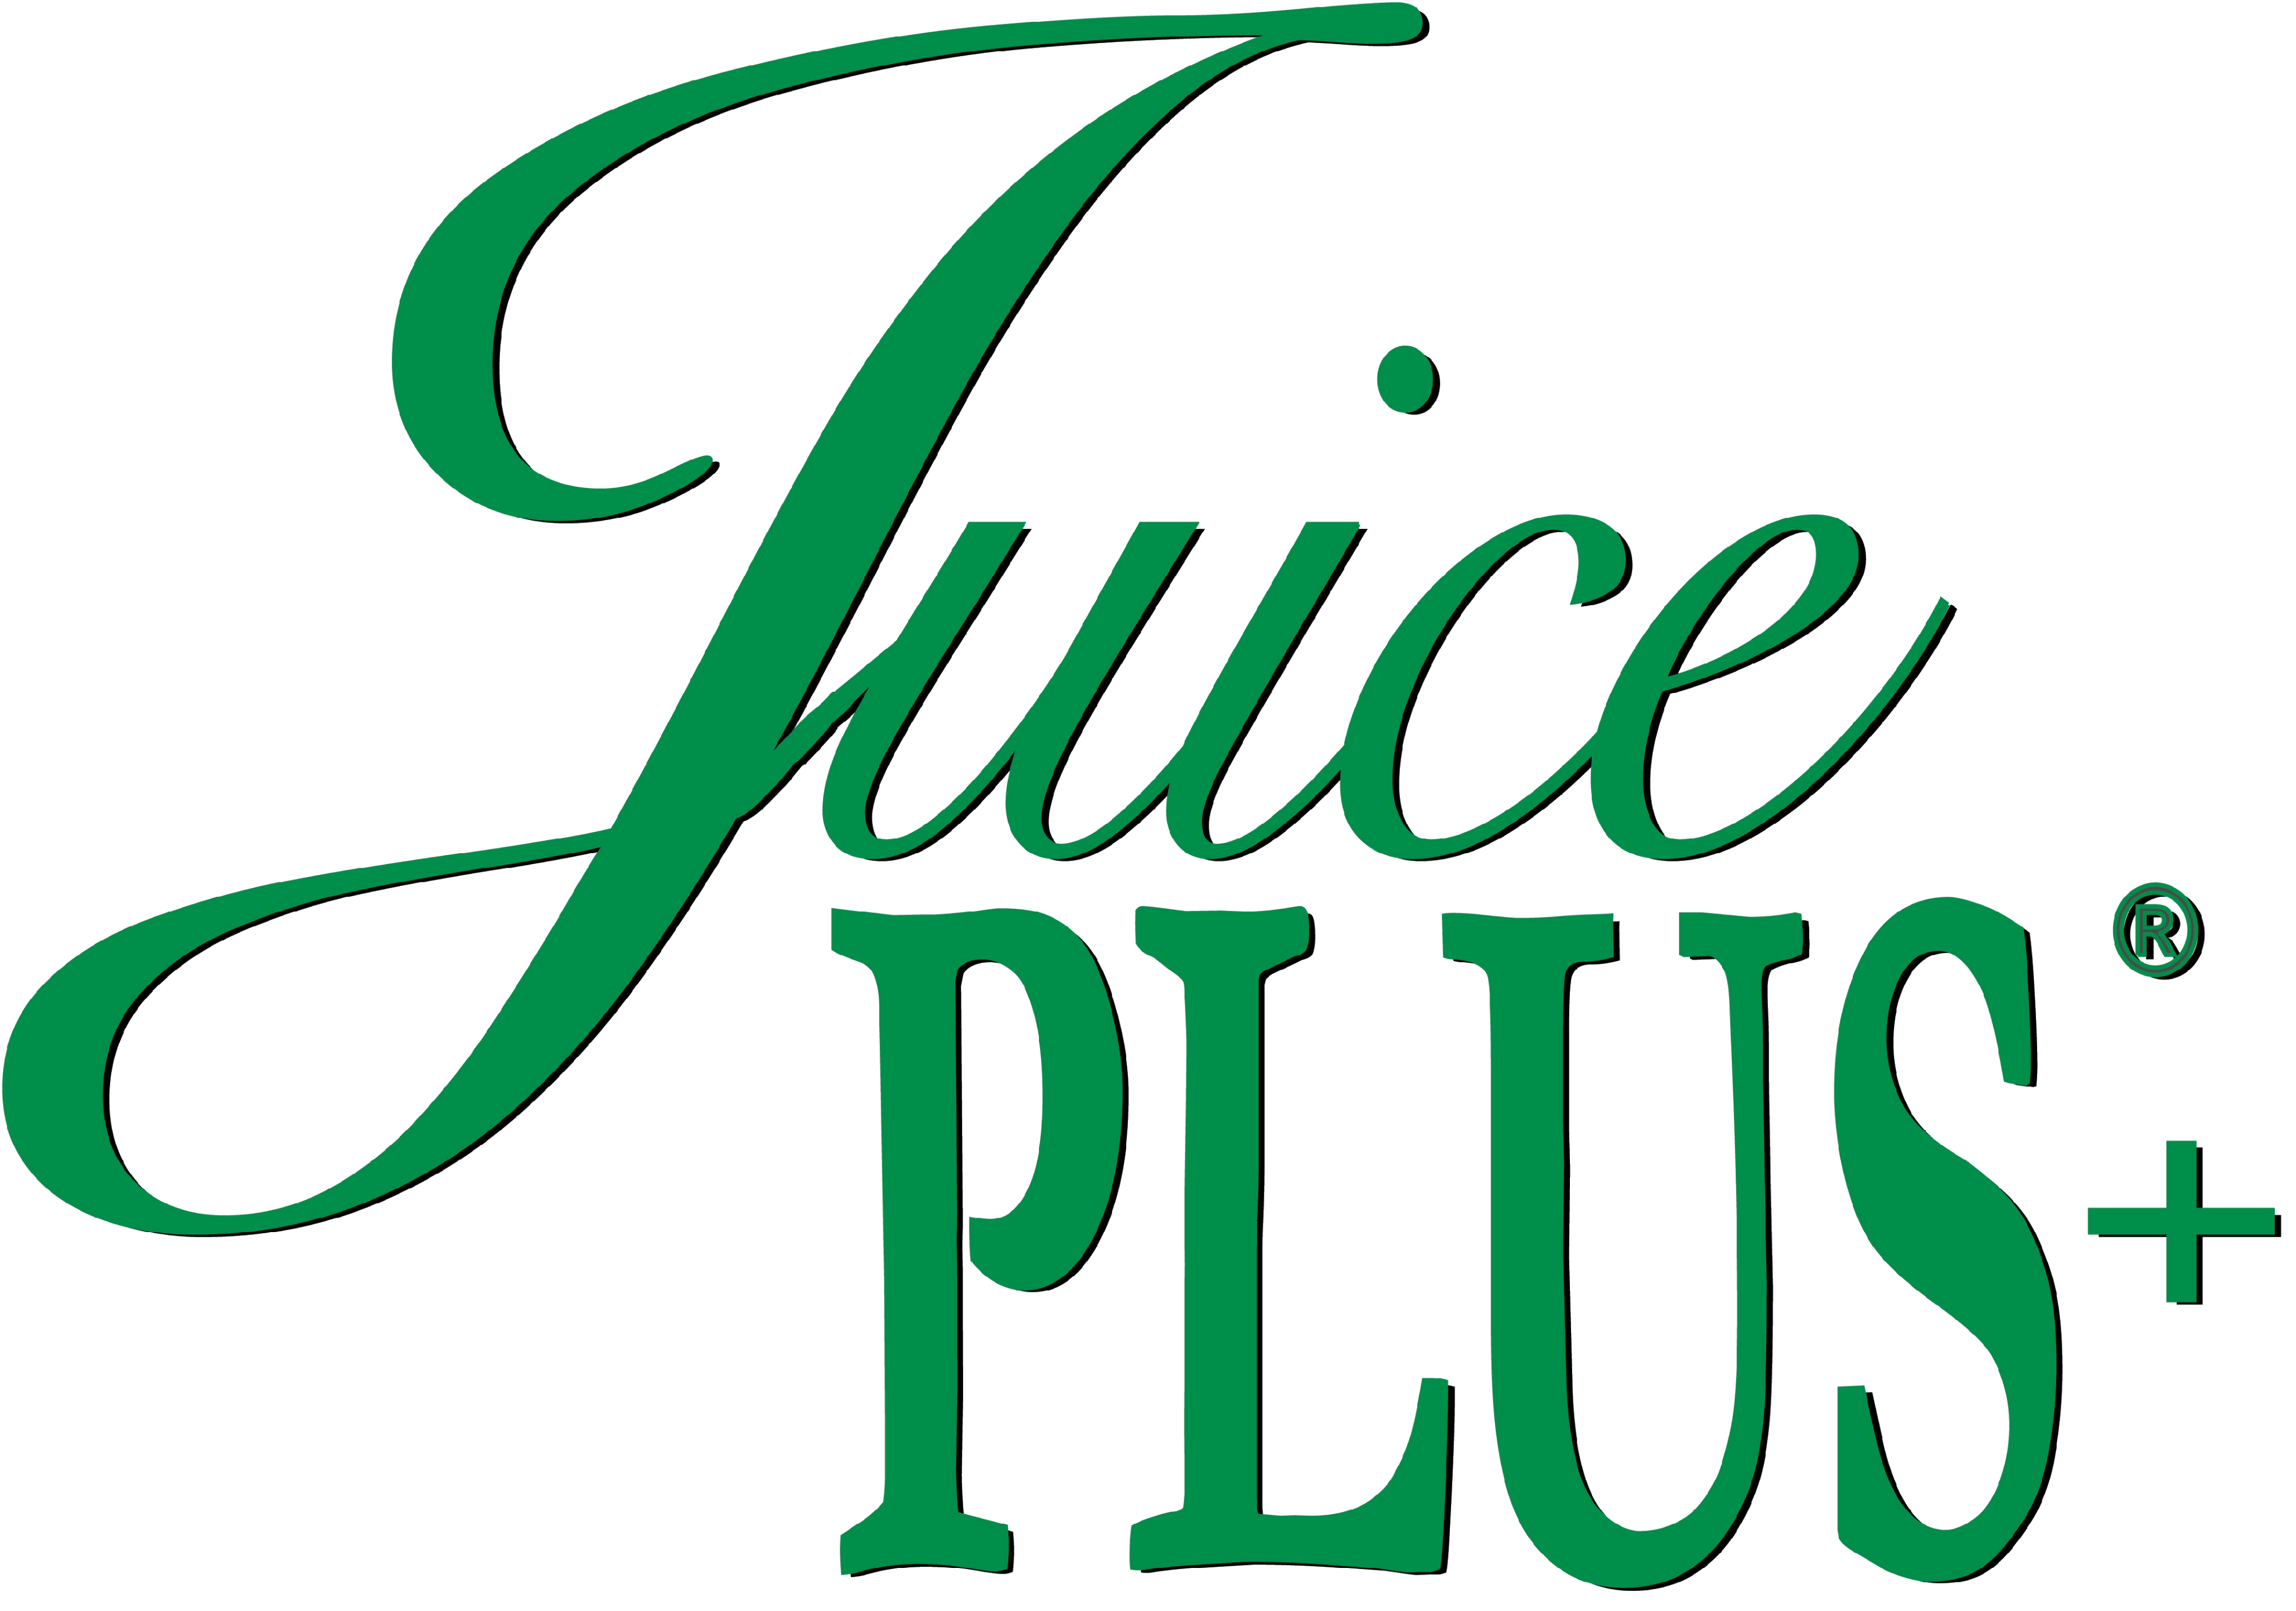 Juice Plus Logo - Juice plus Logos